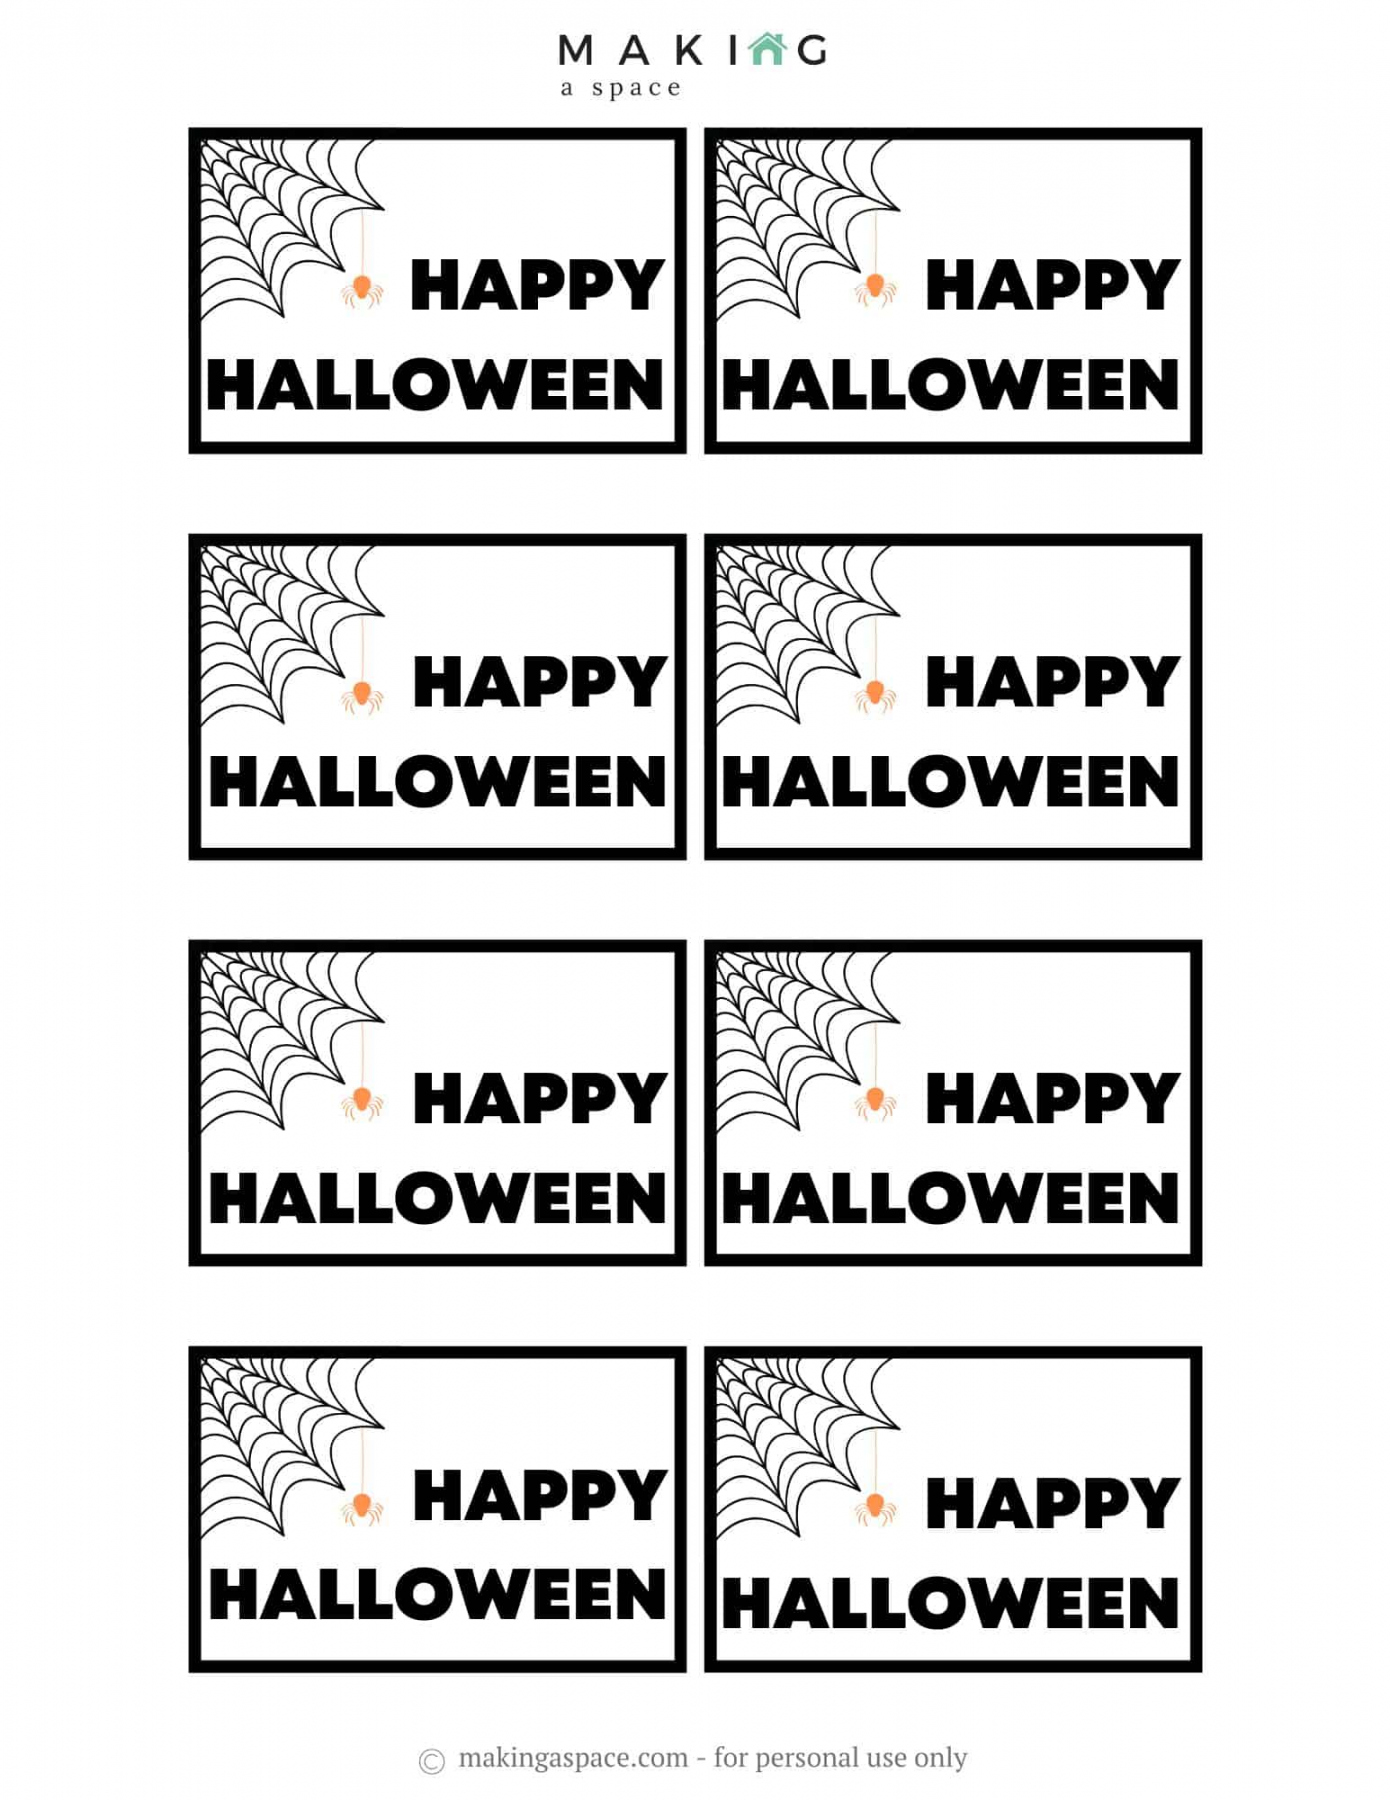 Free Printable Halloween Gift Tags - Making A Space - FREE Printables - Free Printable Halloween Tags